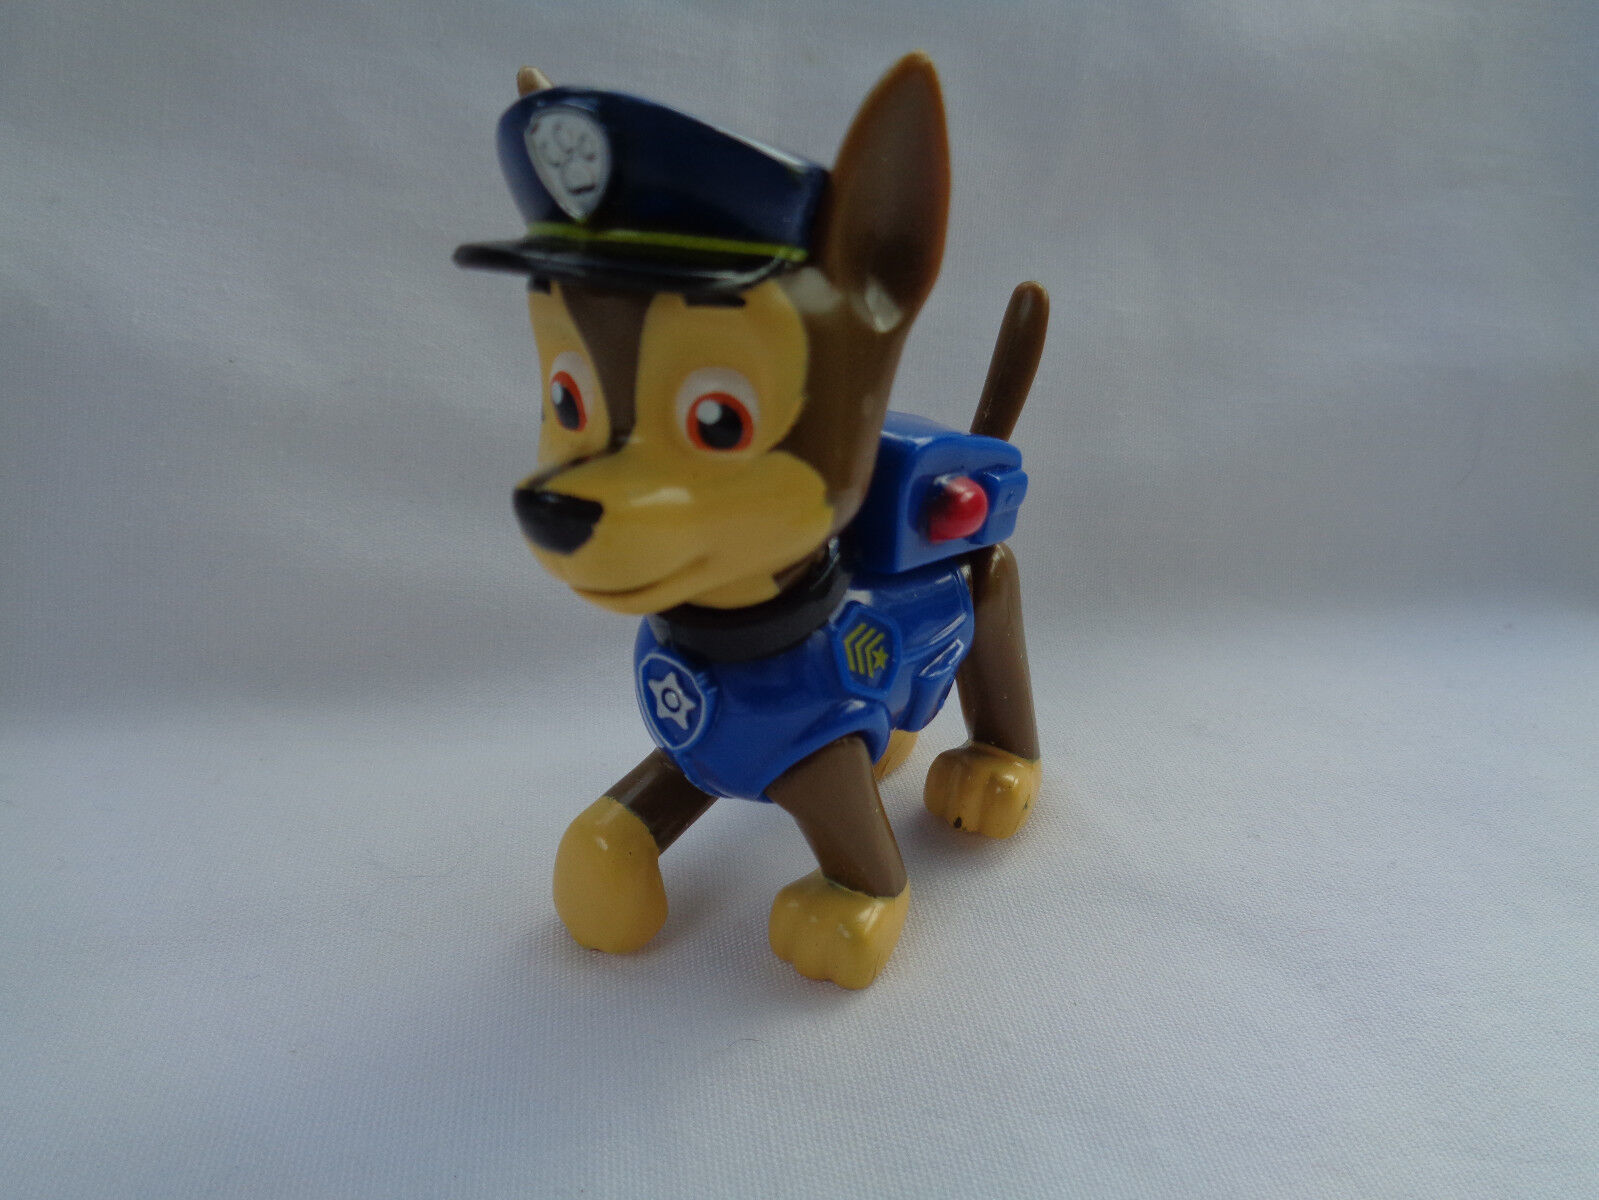 Disney Paw Patrol Chase Dog Figure or Cake Topper - $3.90